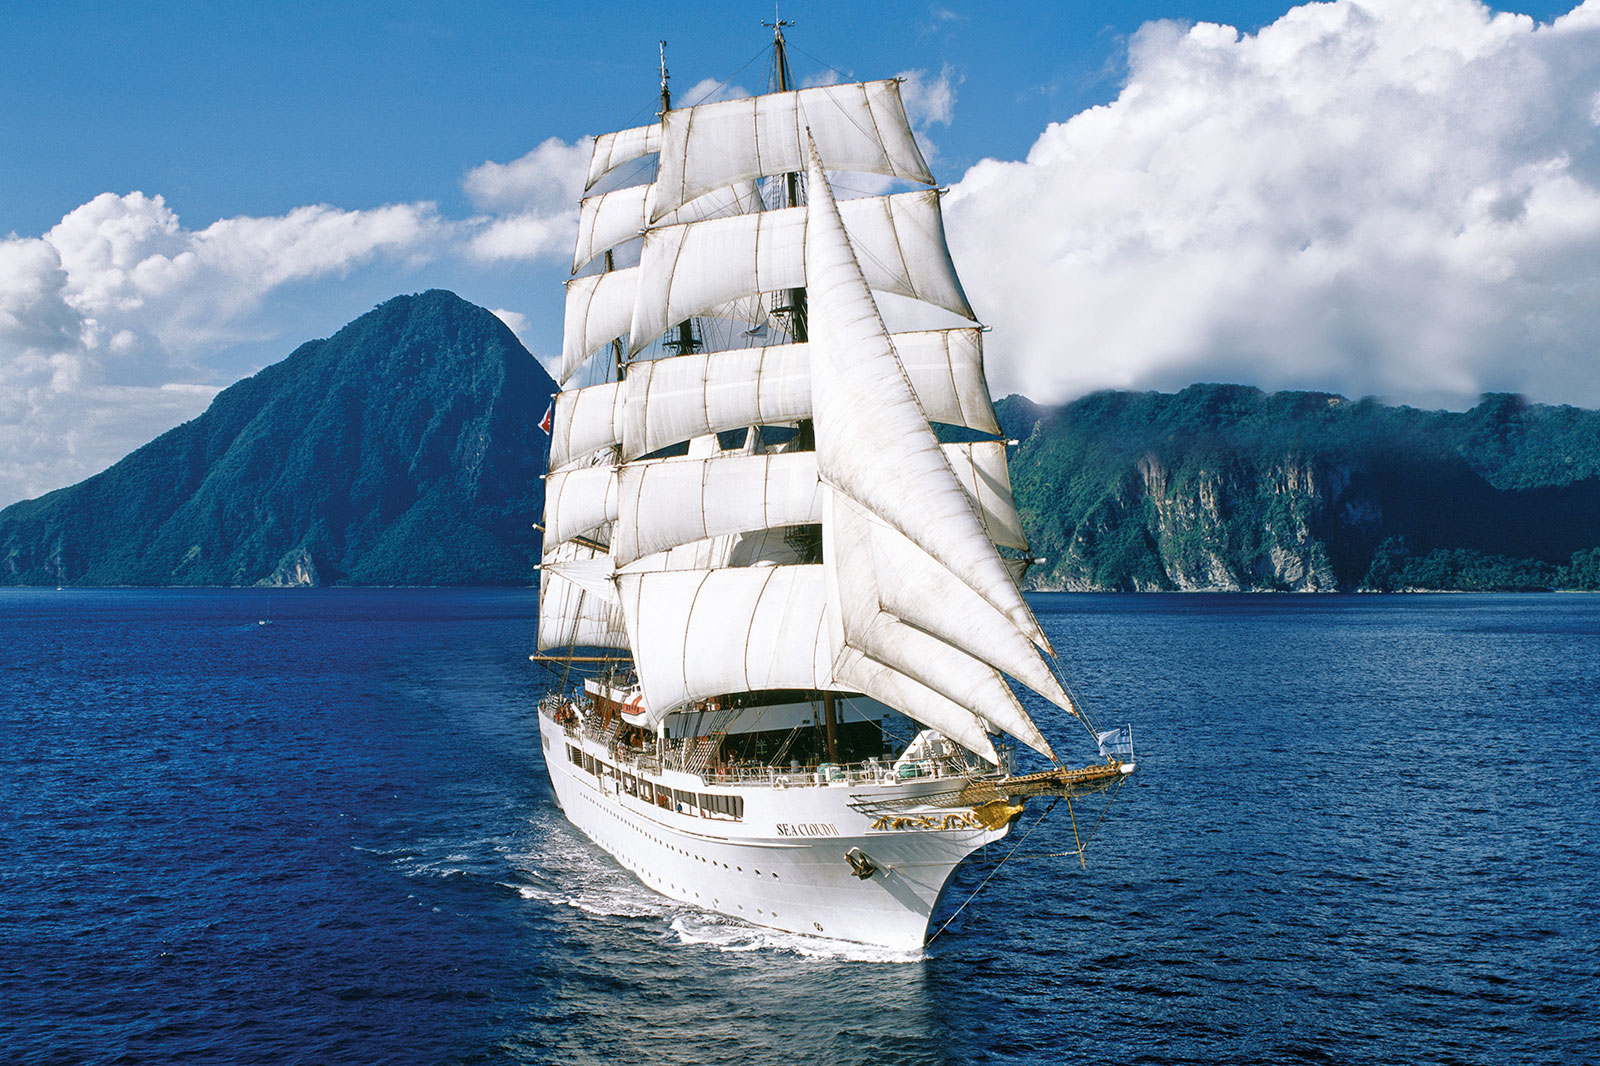 Cruise-tallship-windjammer-Sea-Cloud-2